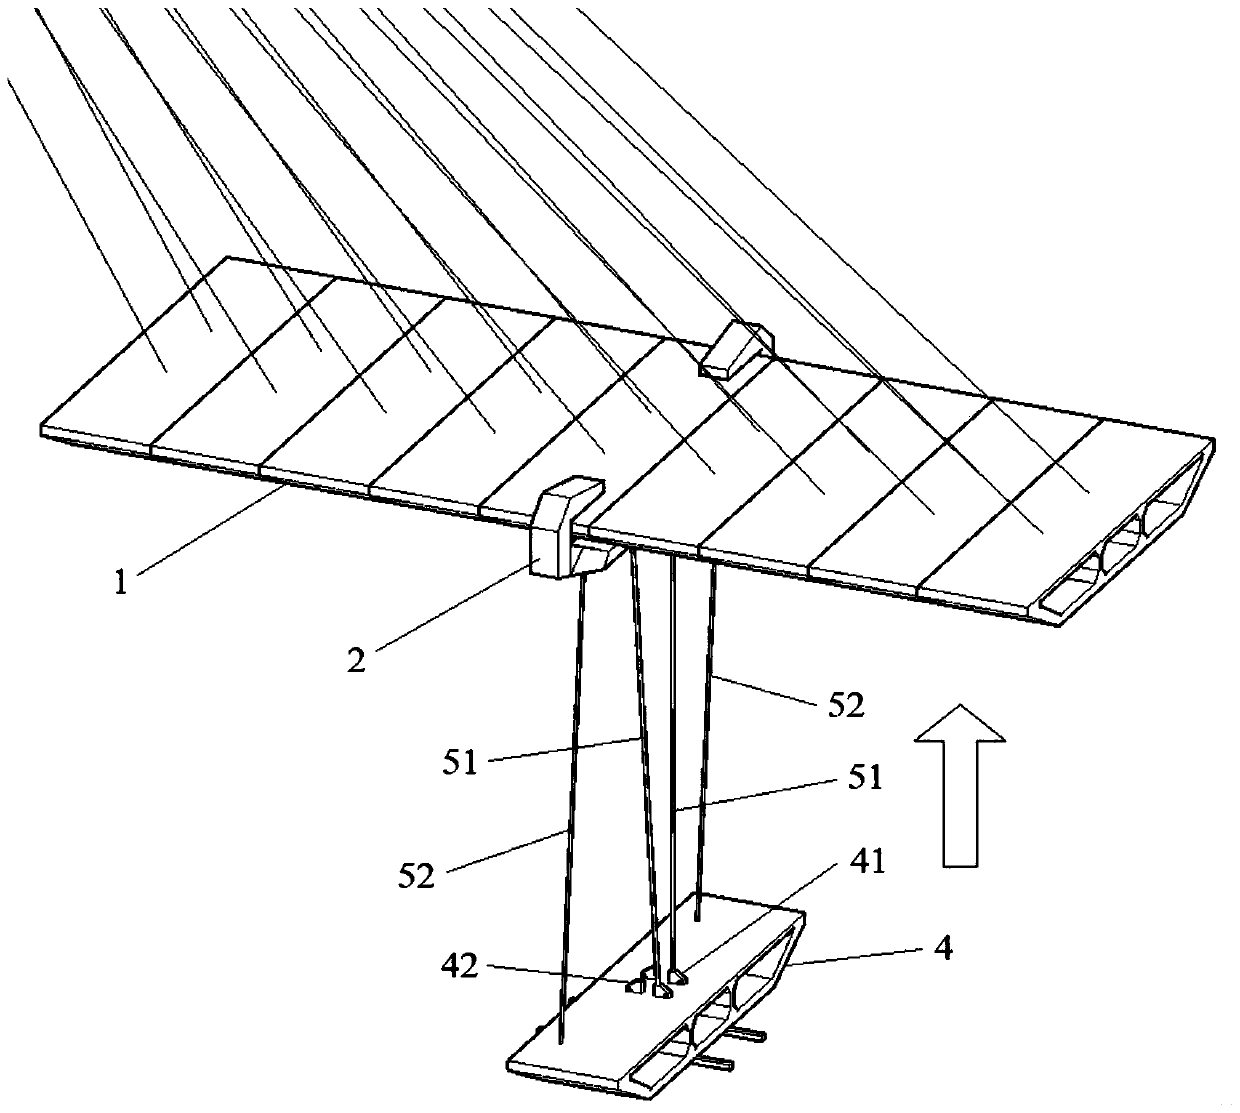 Beam section transportation method for bridge girder cantilever assembly